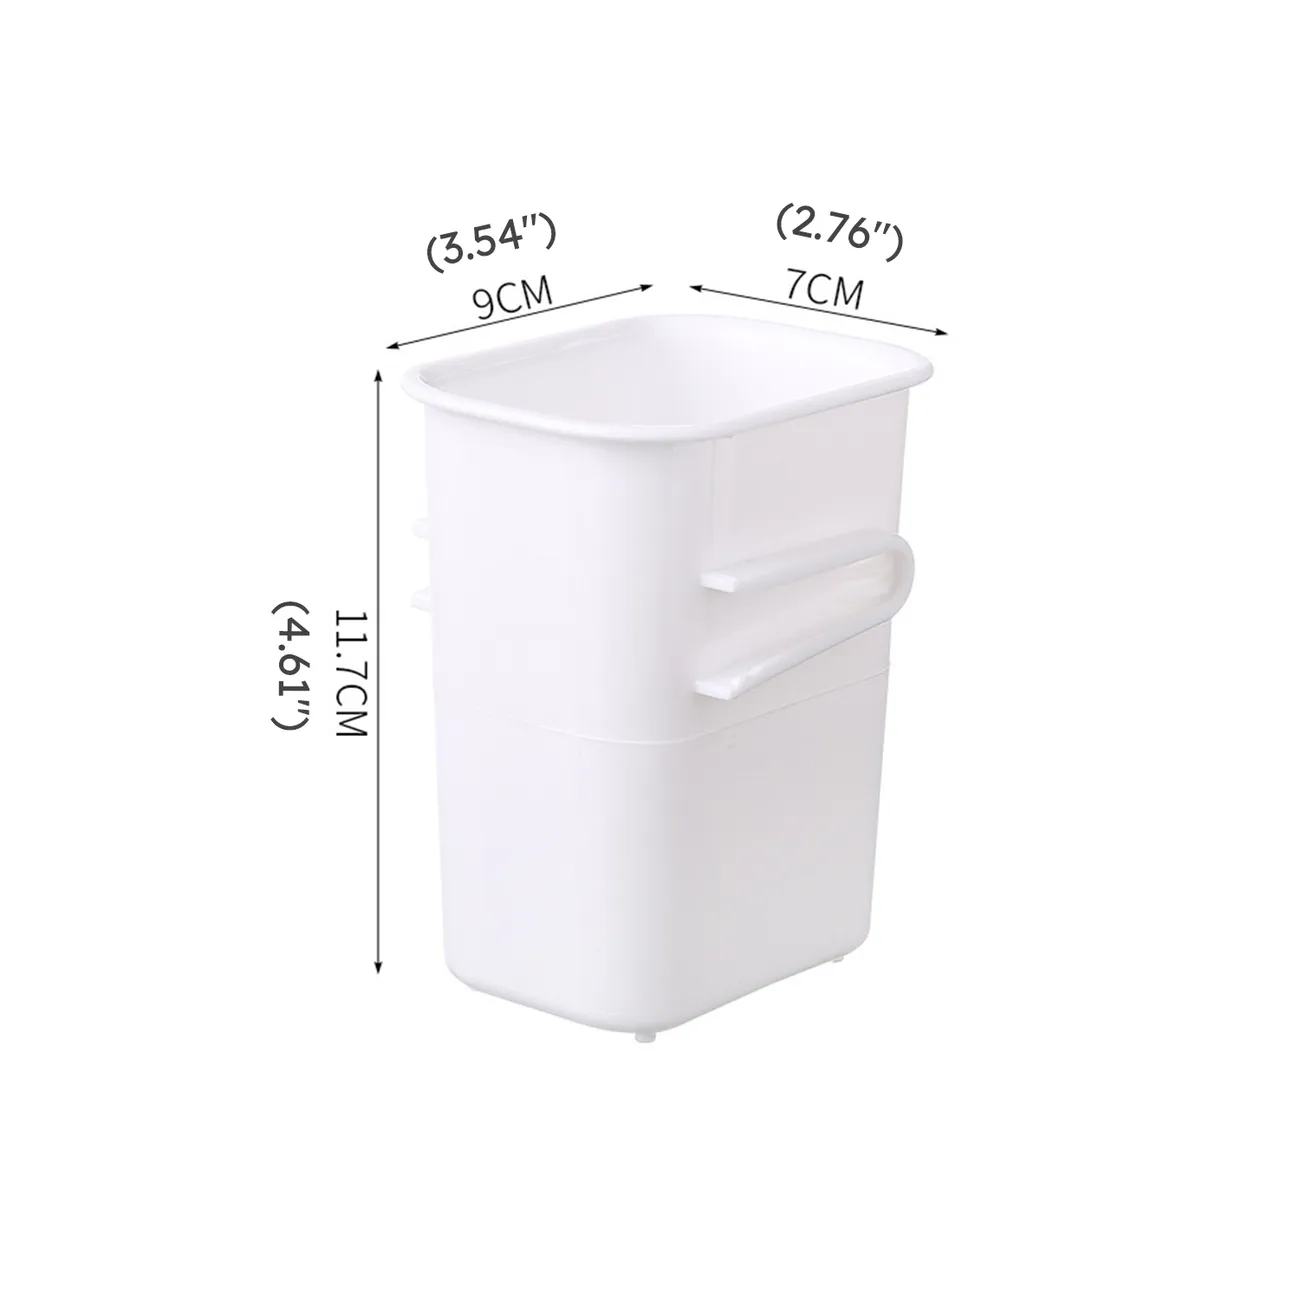 Fridge Sorting Storage Box for Refrigerator Side Door Shelf Connectable Fridge Organizer Bins with Buckle Design White big image 1